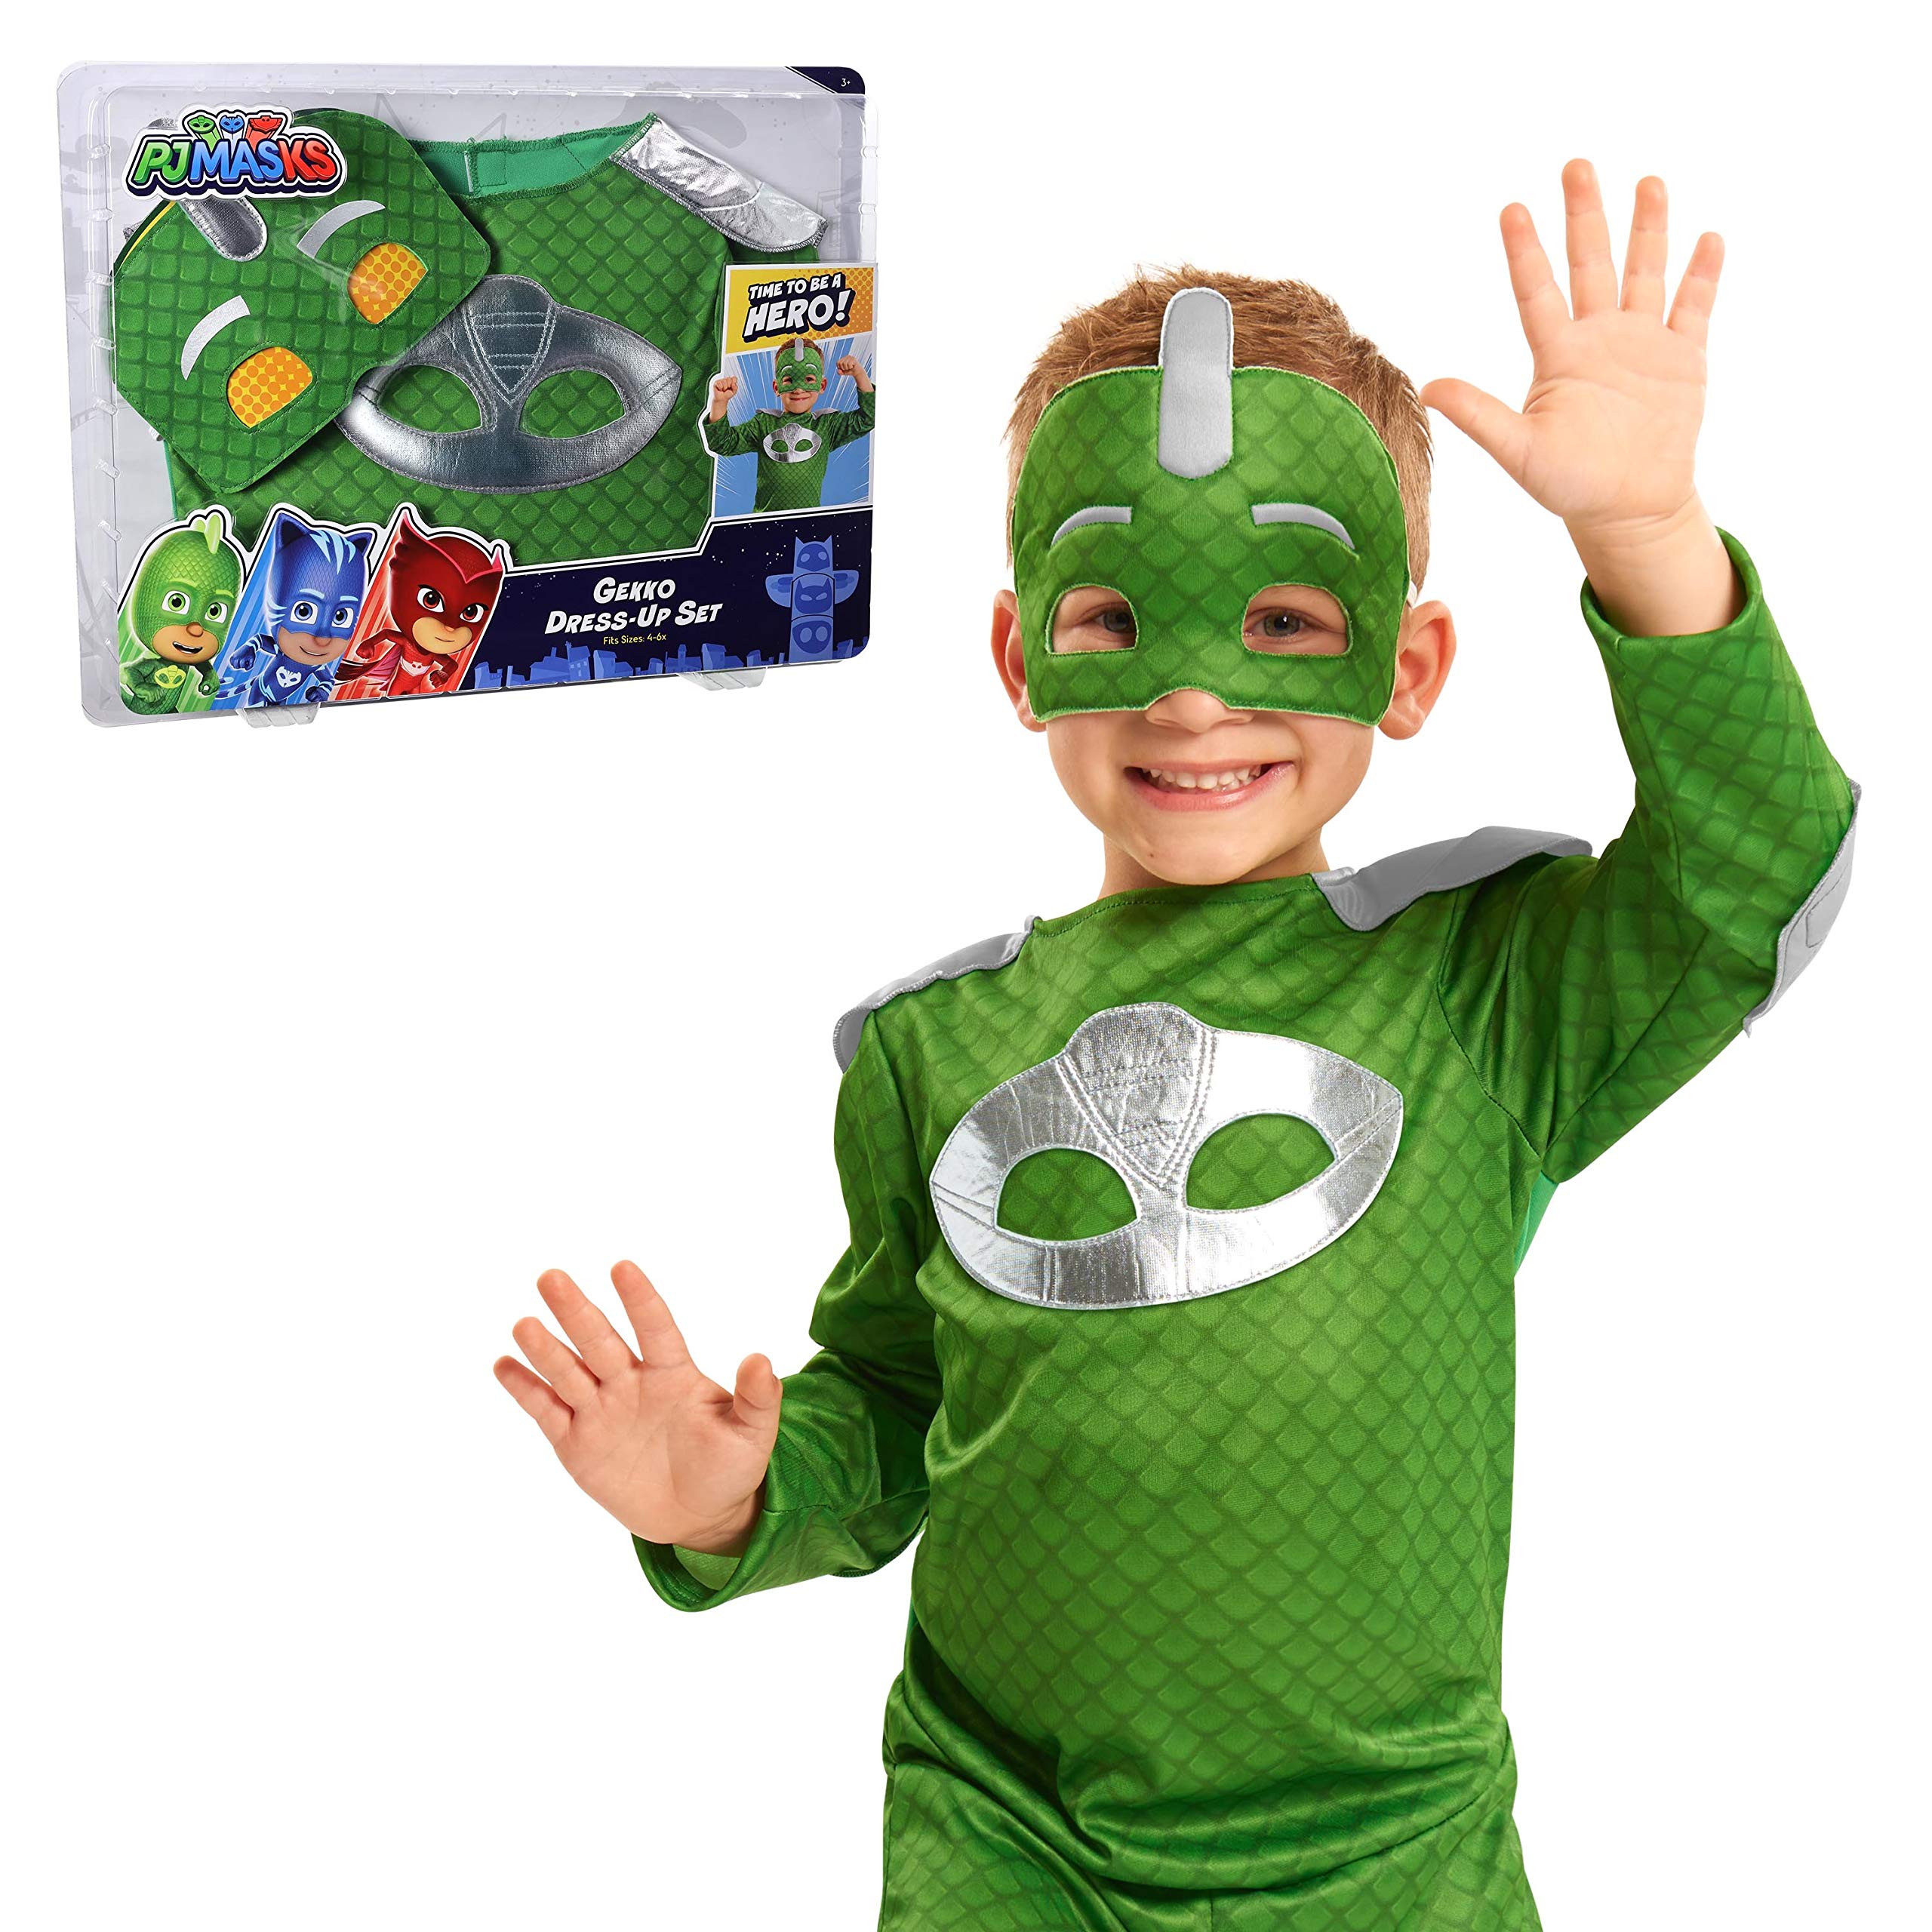 PJ Masks Turbo Blast Gekko Dress Up Set with Soft Mask, Size 4-6X, Kids Pretend Play Costumes, Green, by Just Play